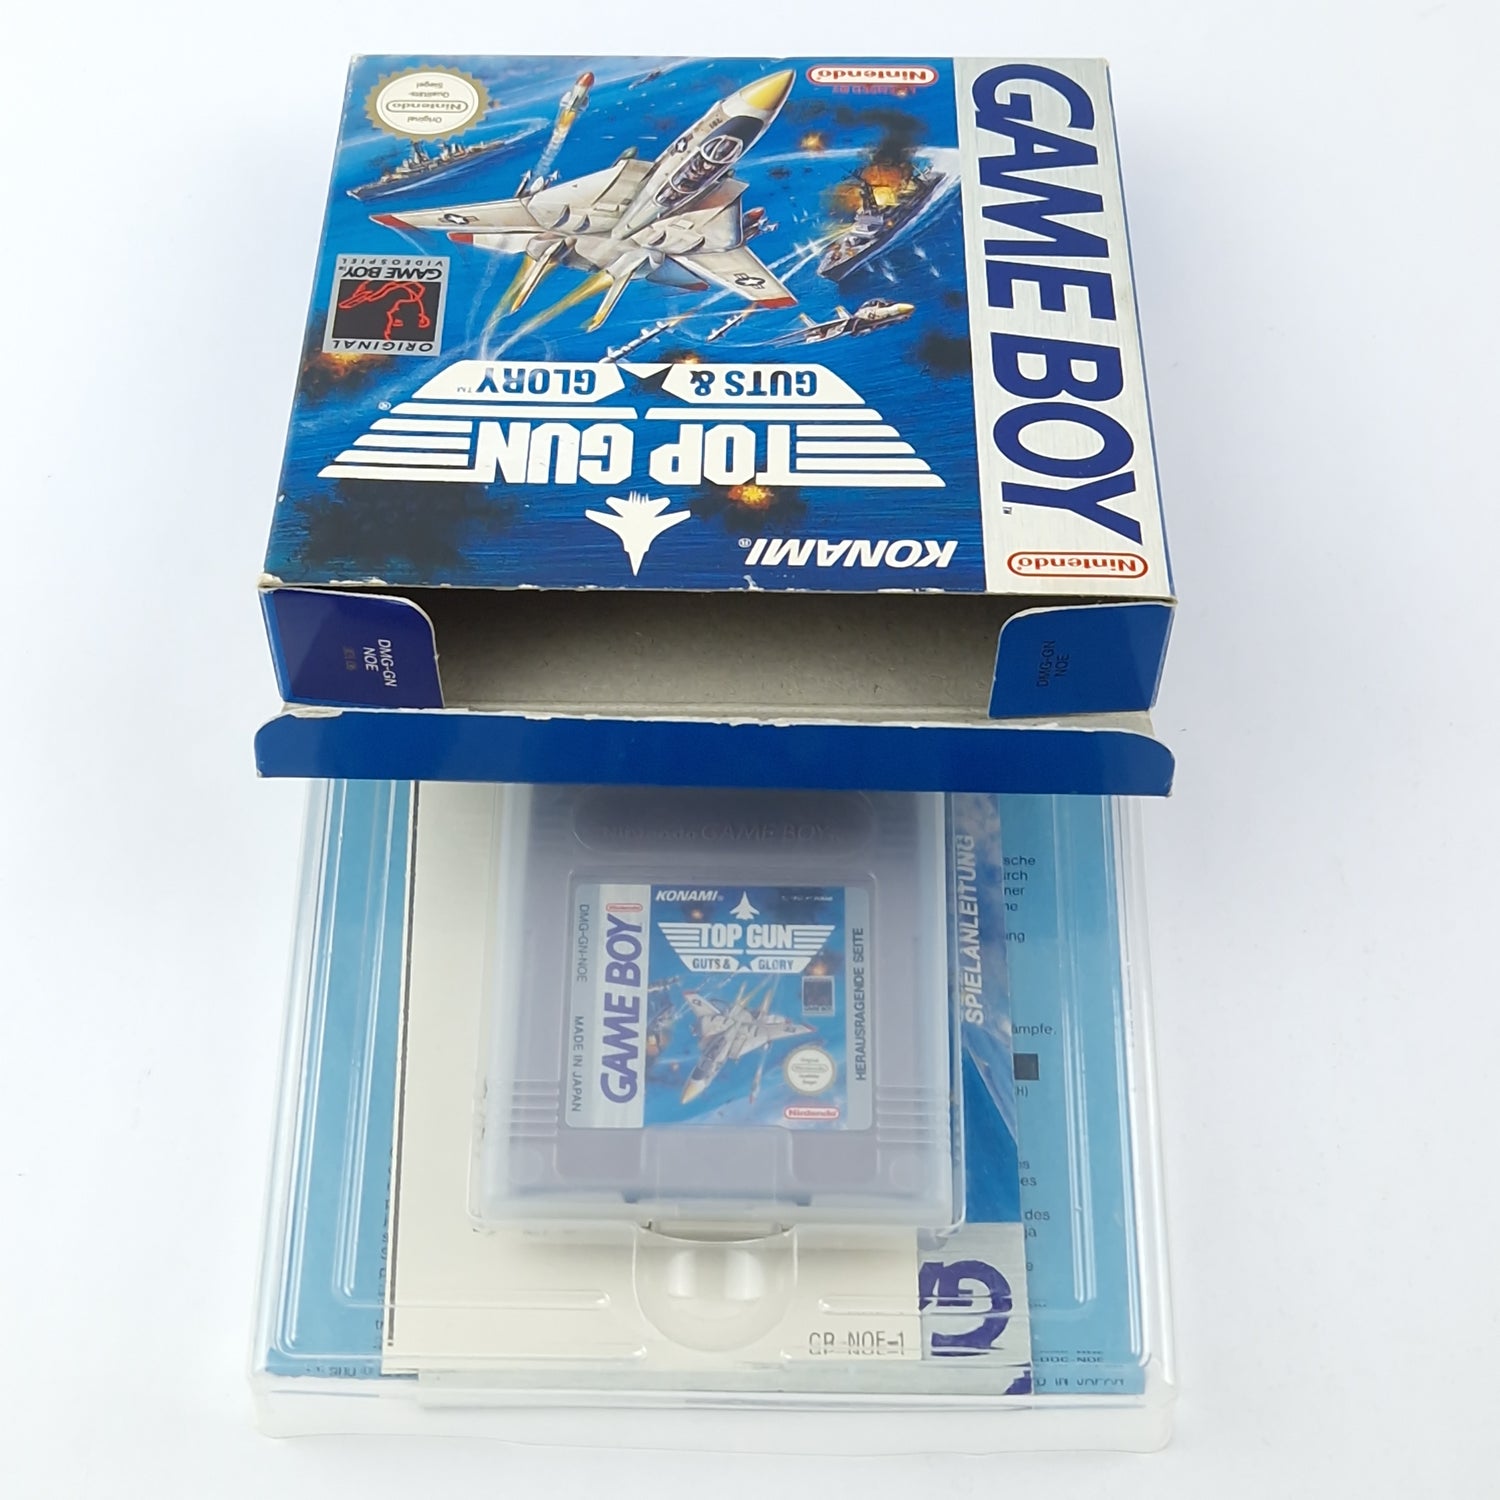 Nintendo Game Boy Spiel : Top Gun Guts & Glory - Modul Anleitung OVP cib GAMEBOY